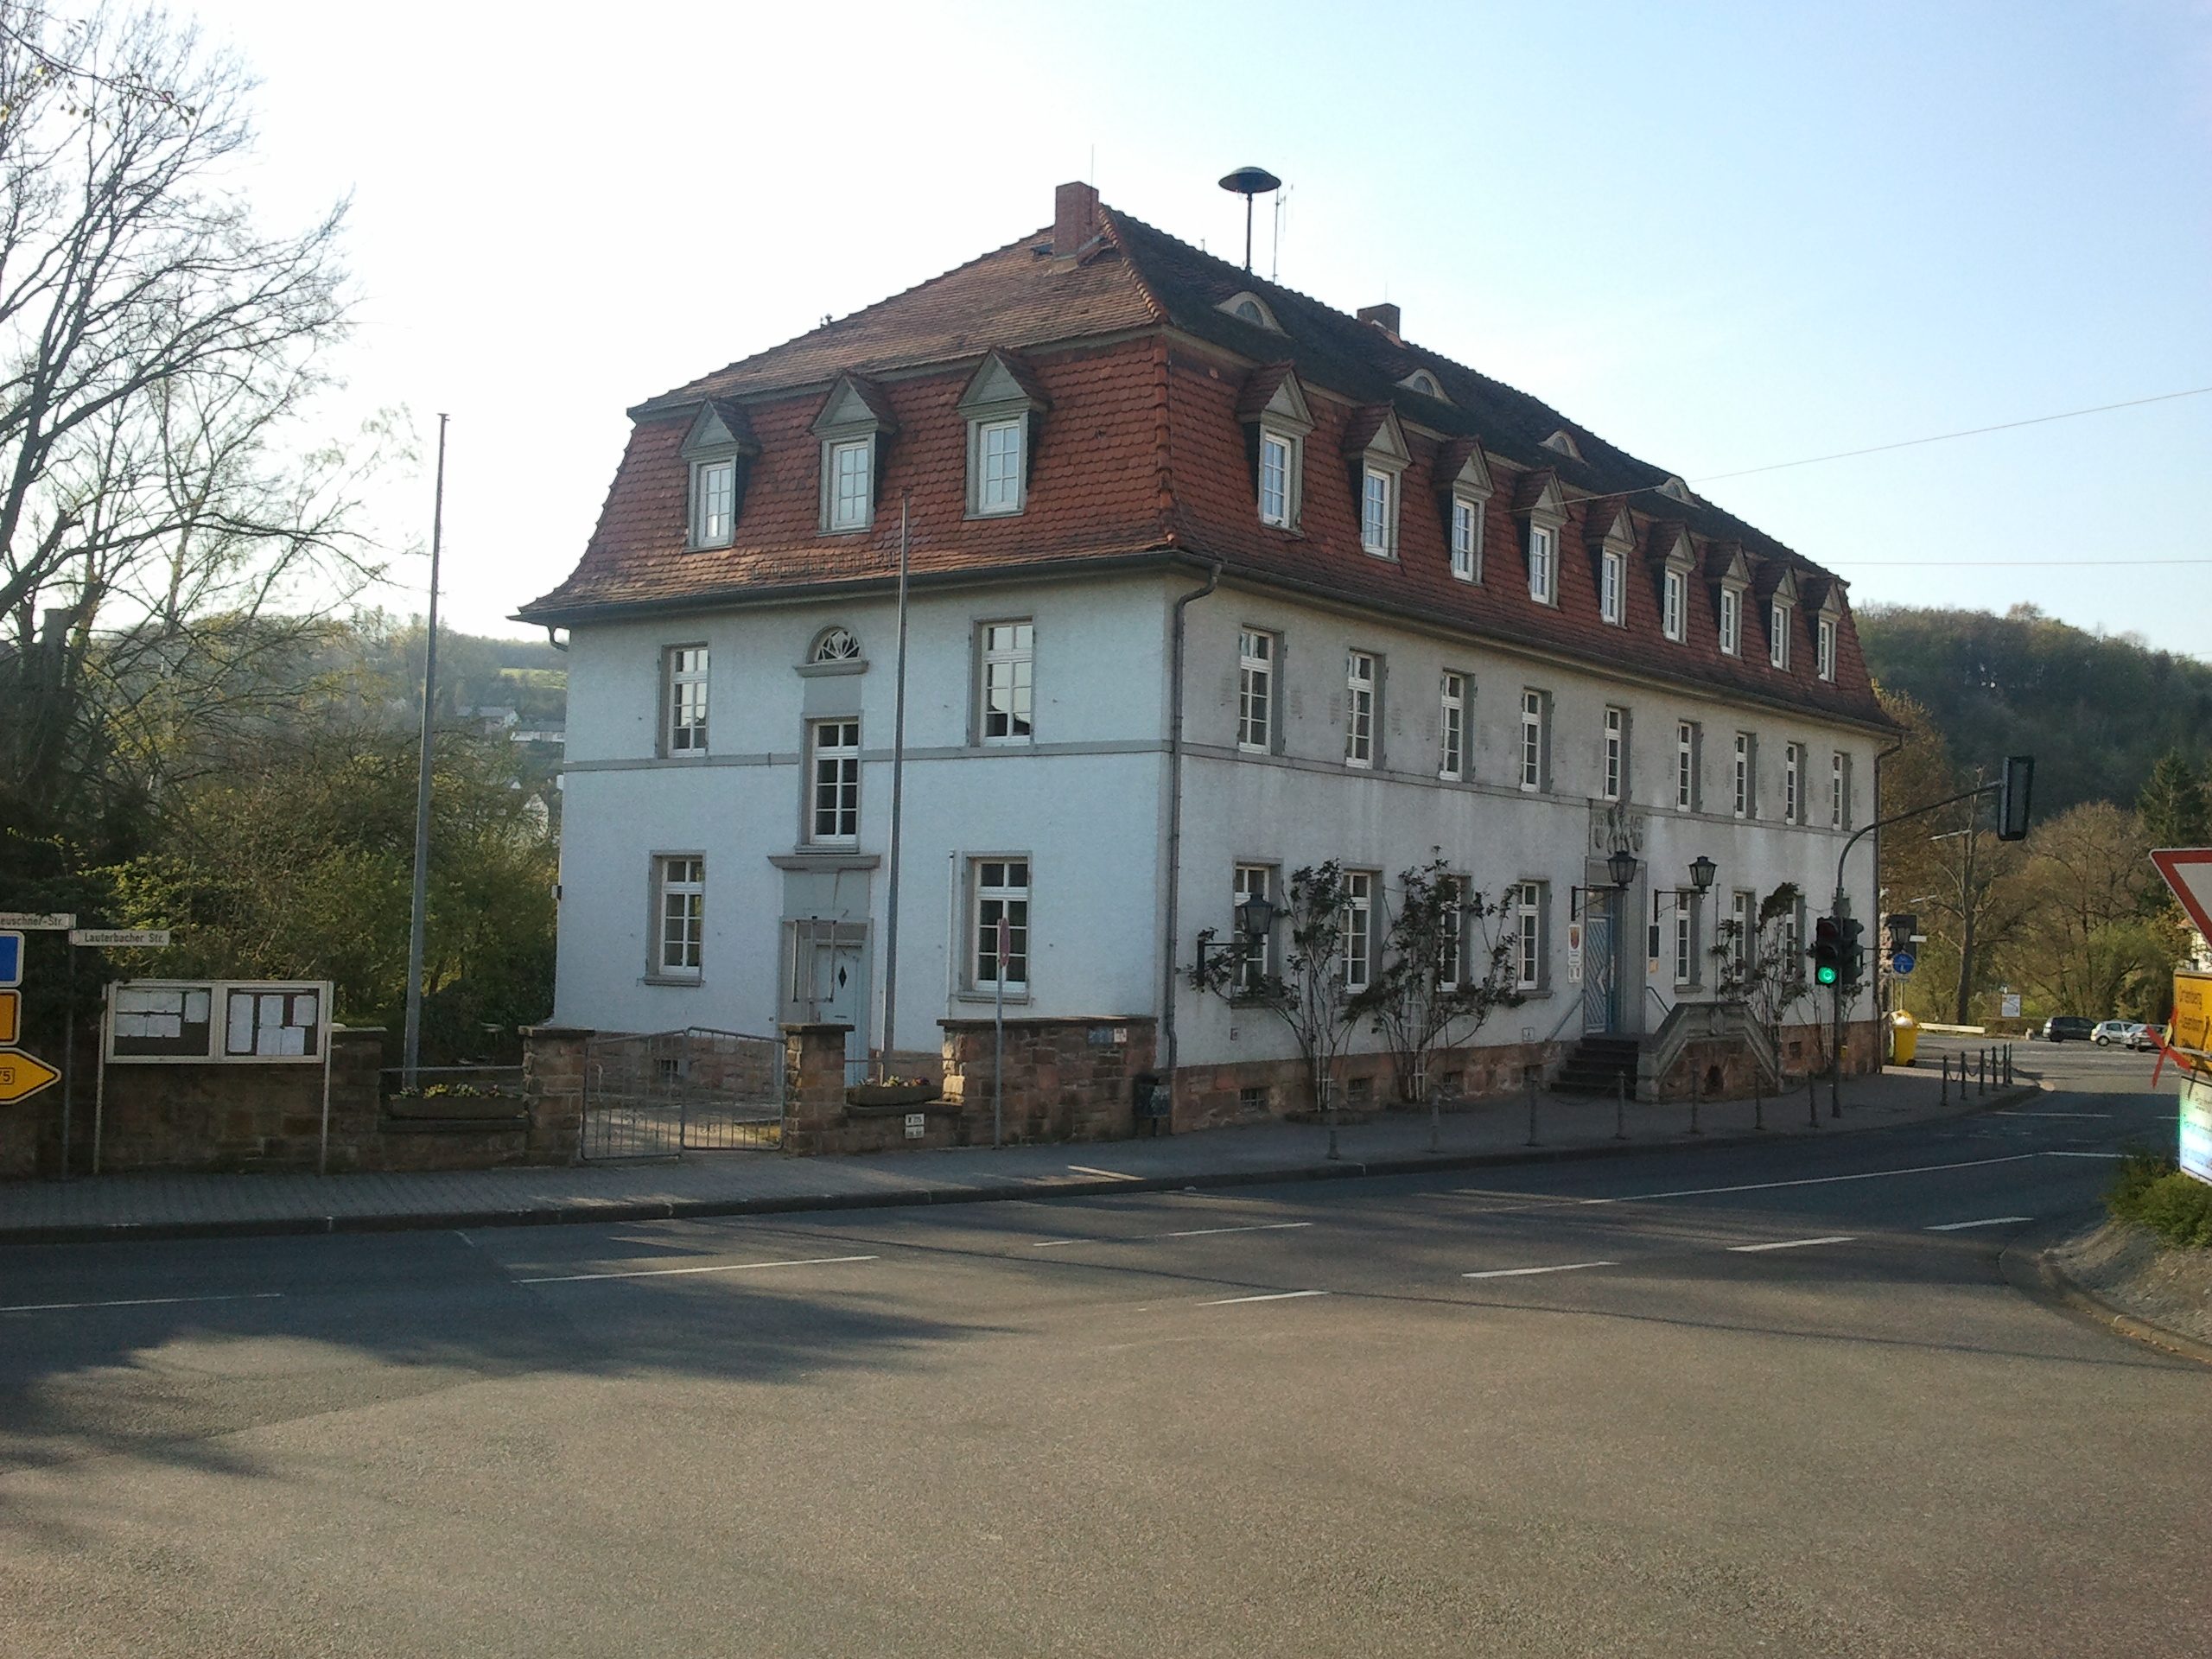 Rathaus Ortenberg (Alte Post)
